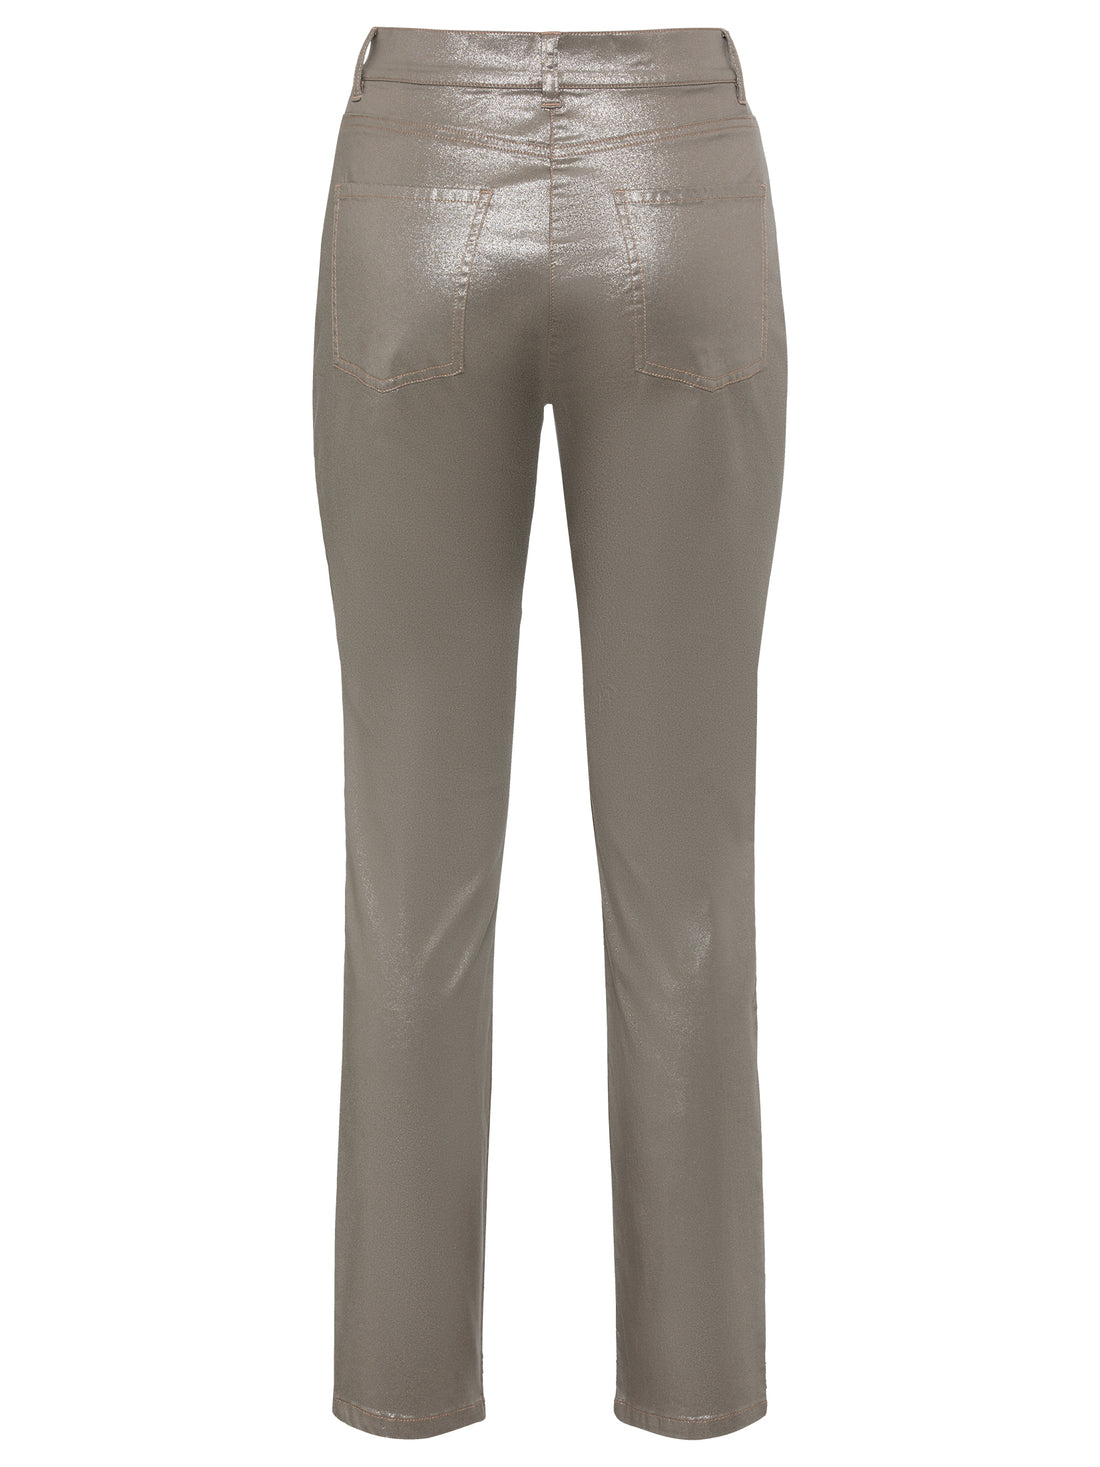 OLSEN - Champagne Metallic Mona Slim Pants